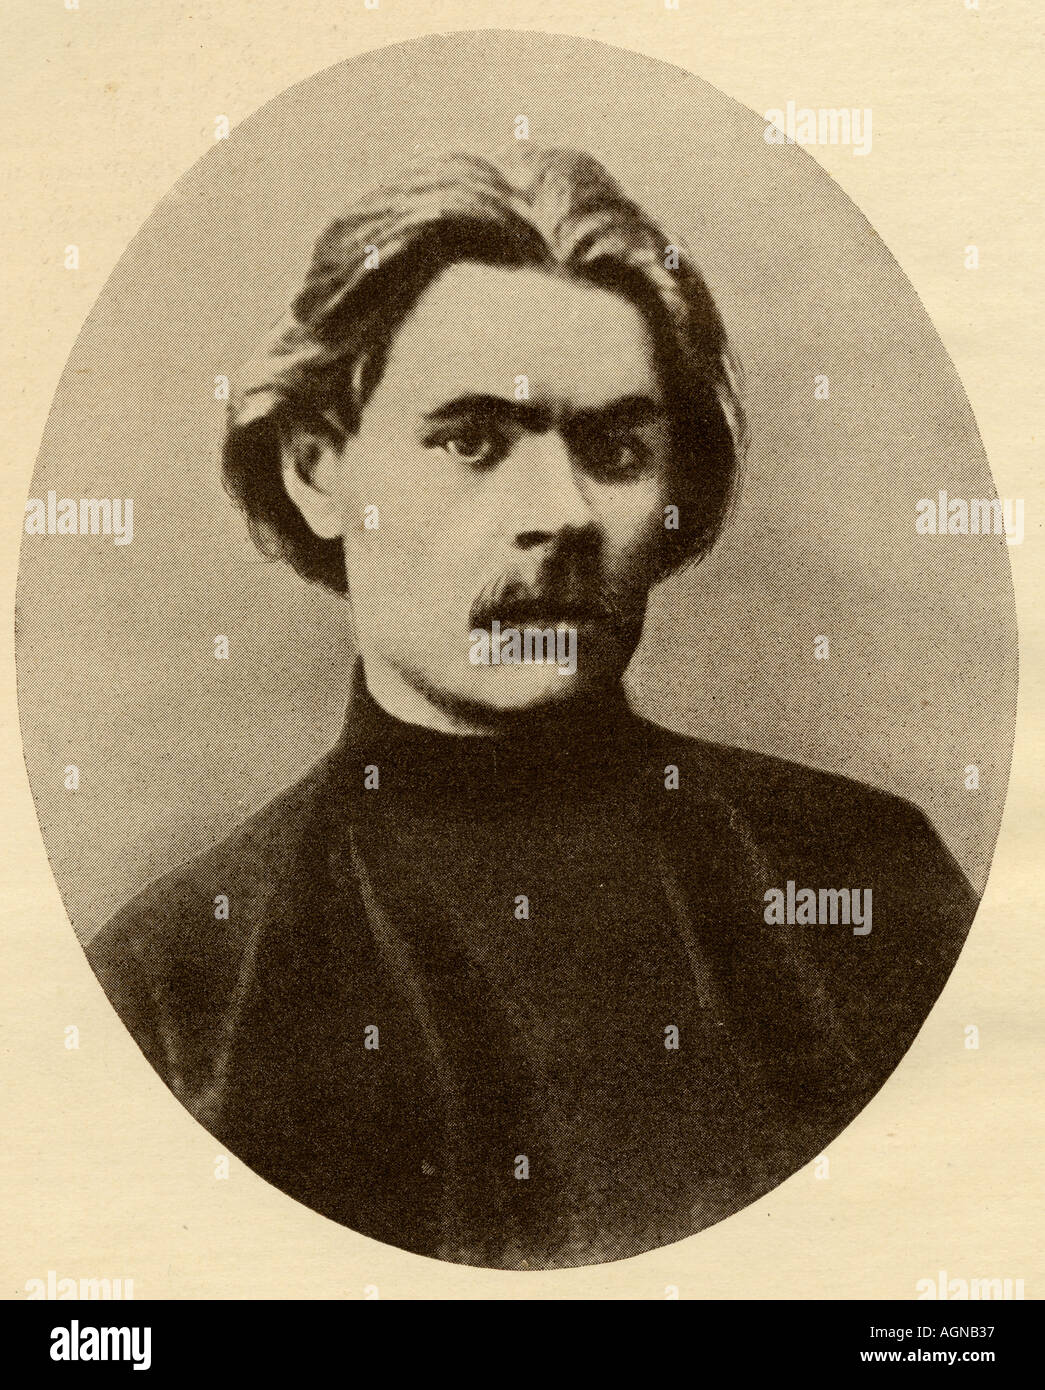 Alexei Maximovich Peshkov, aka Maxim Gorki, 1868-1936. Sowjetische Schriftsteller, Dramatiker und Sozialaktivist. Stockfoto